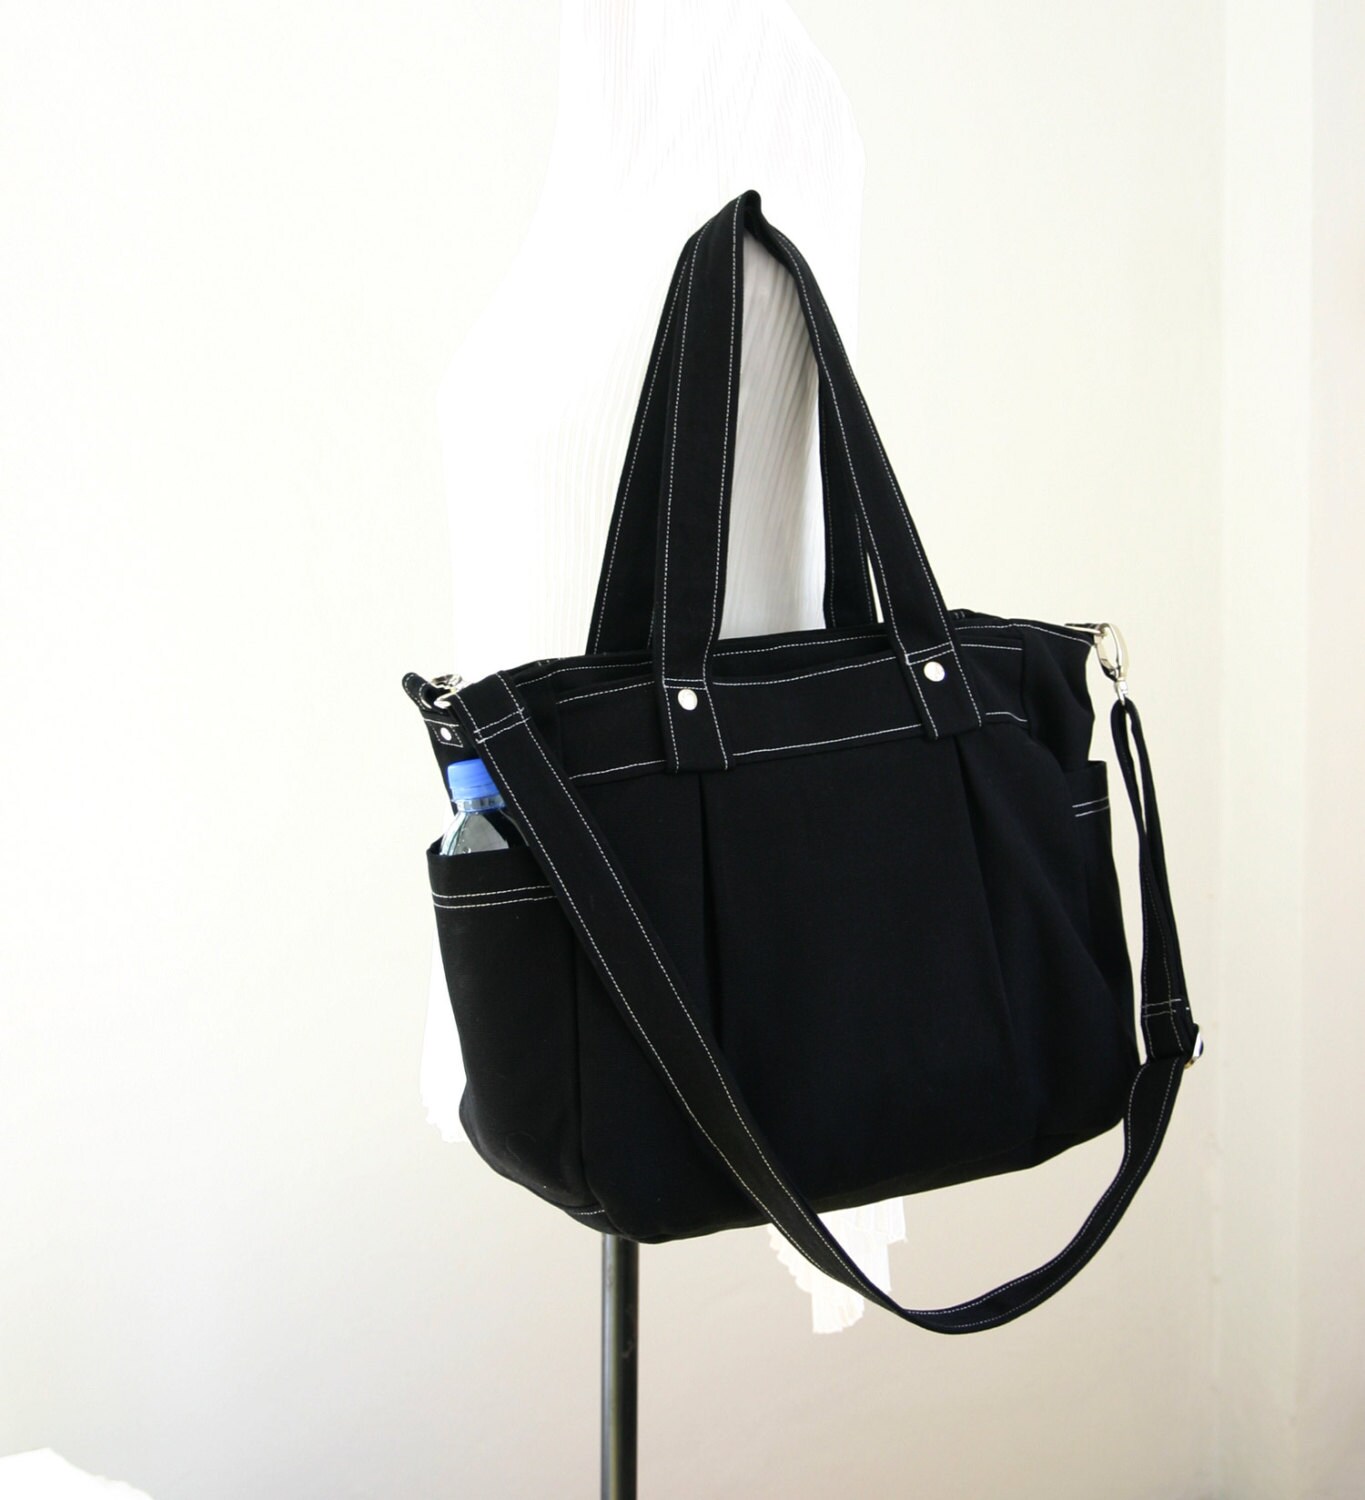 SALE Black Canvas Tote Bag / Diaper Bag / School / Messenger